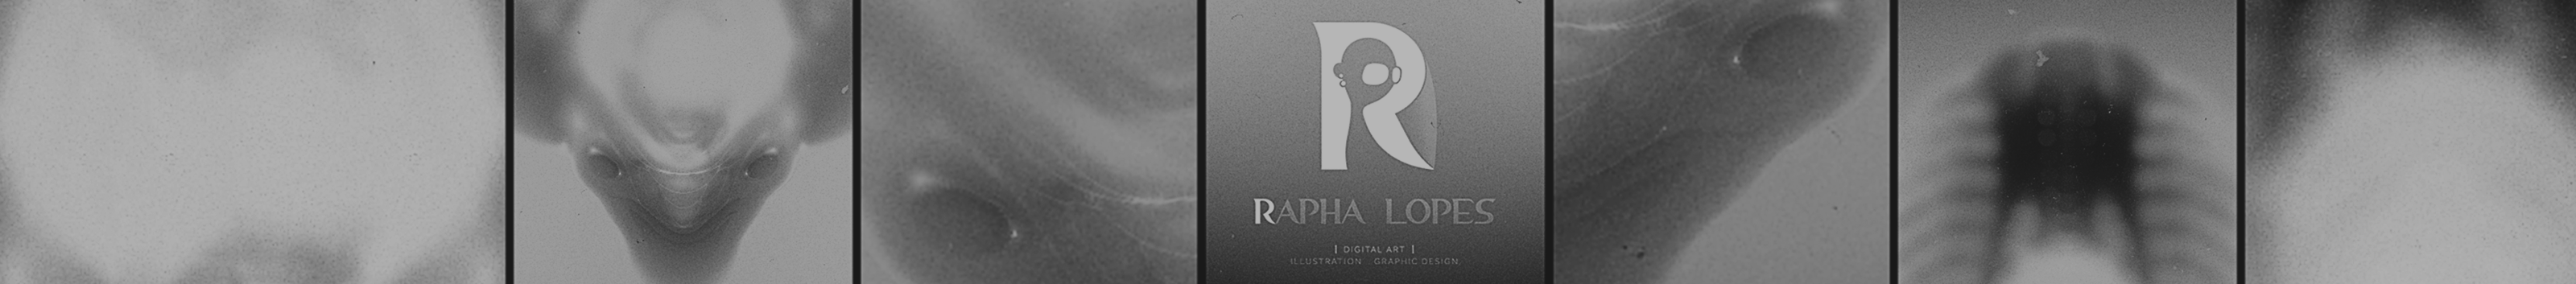 Raphael Lopes's profile banner